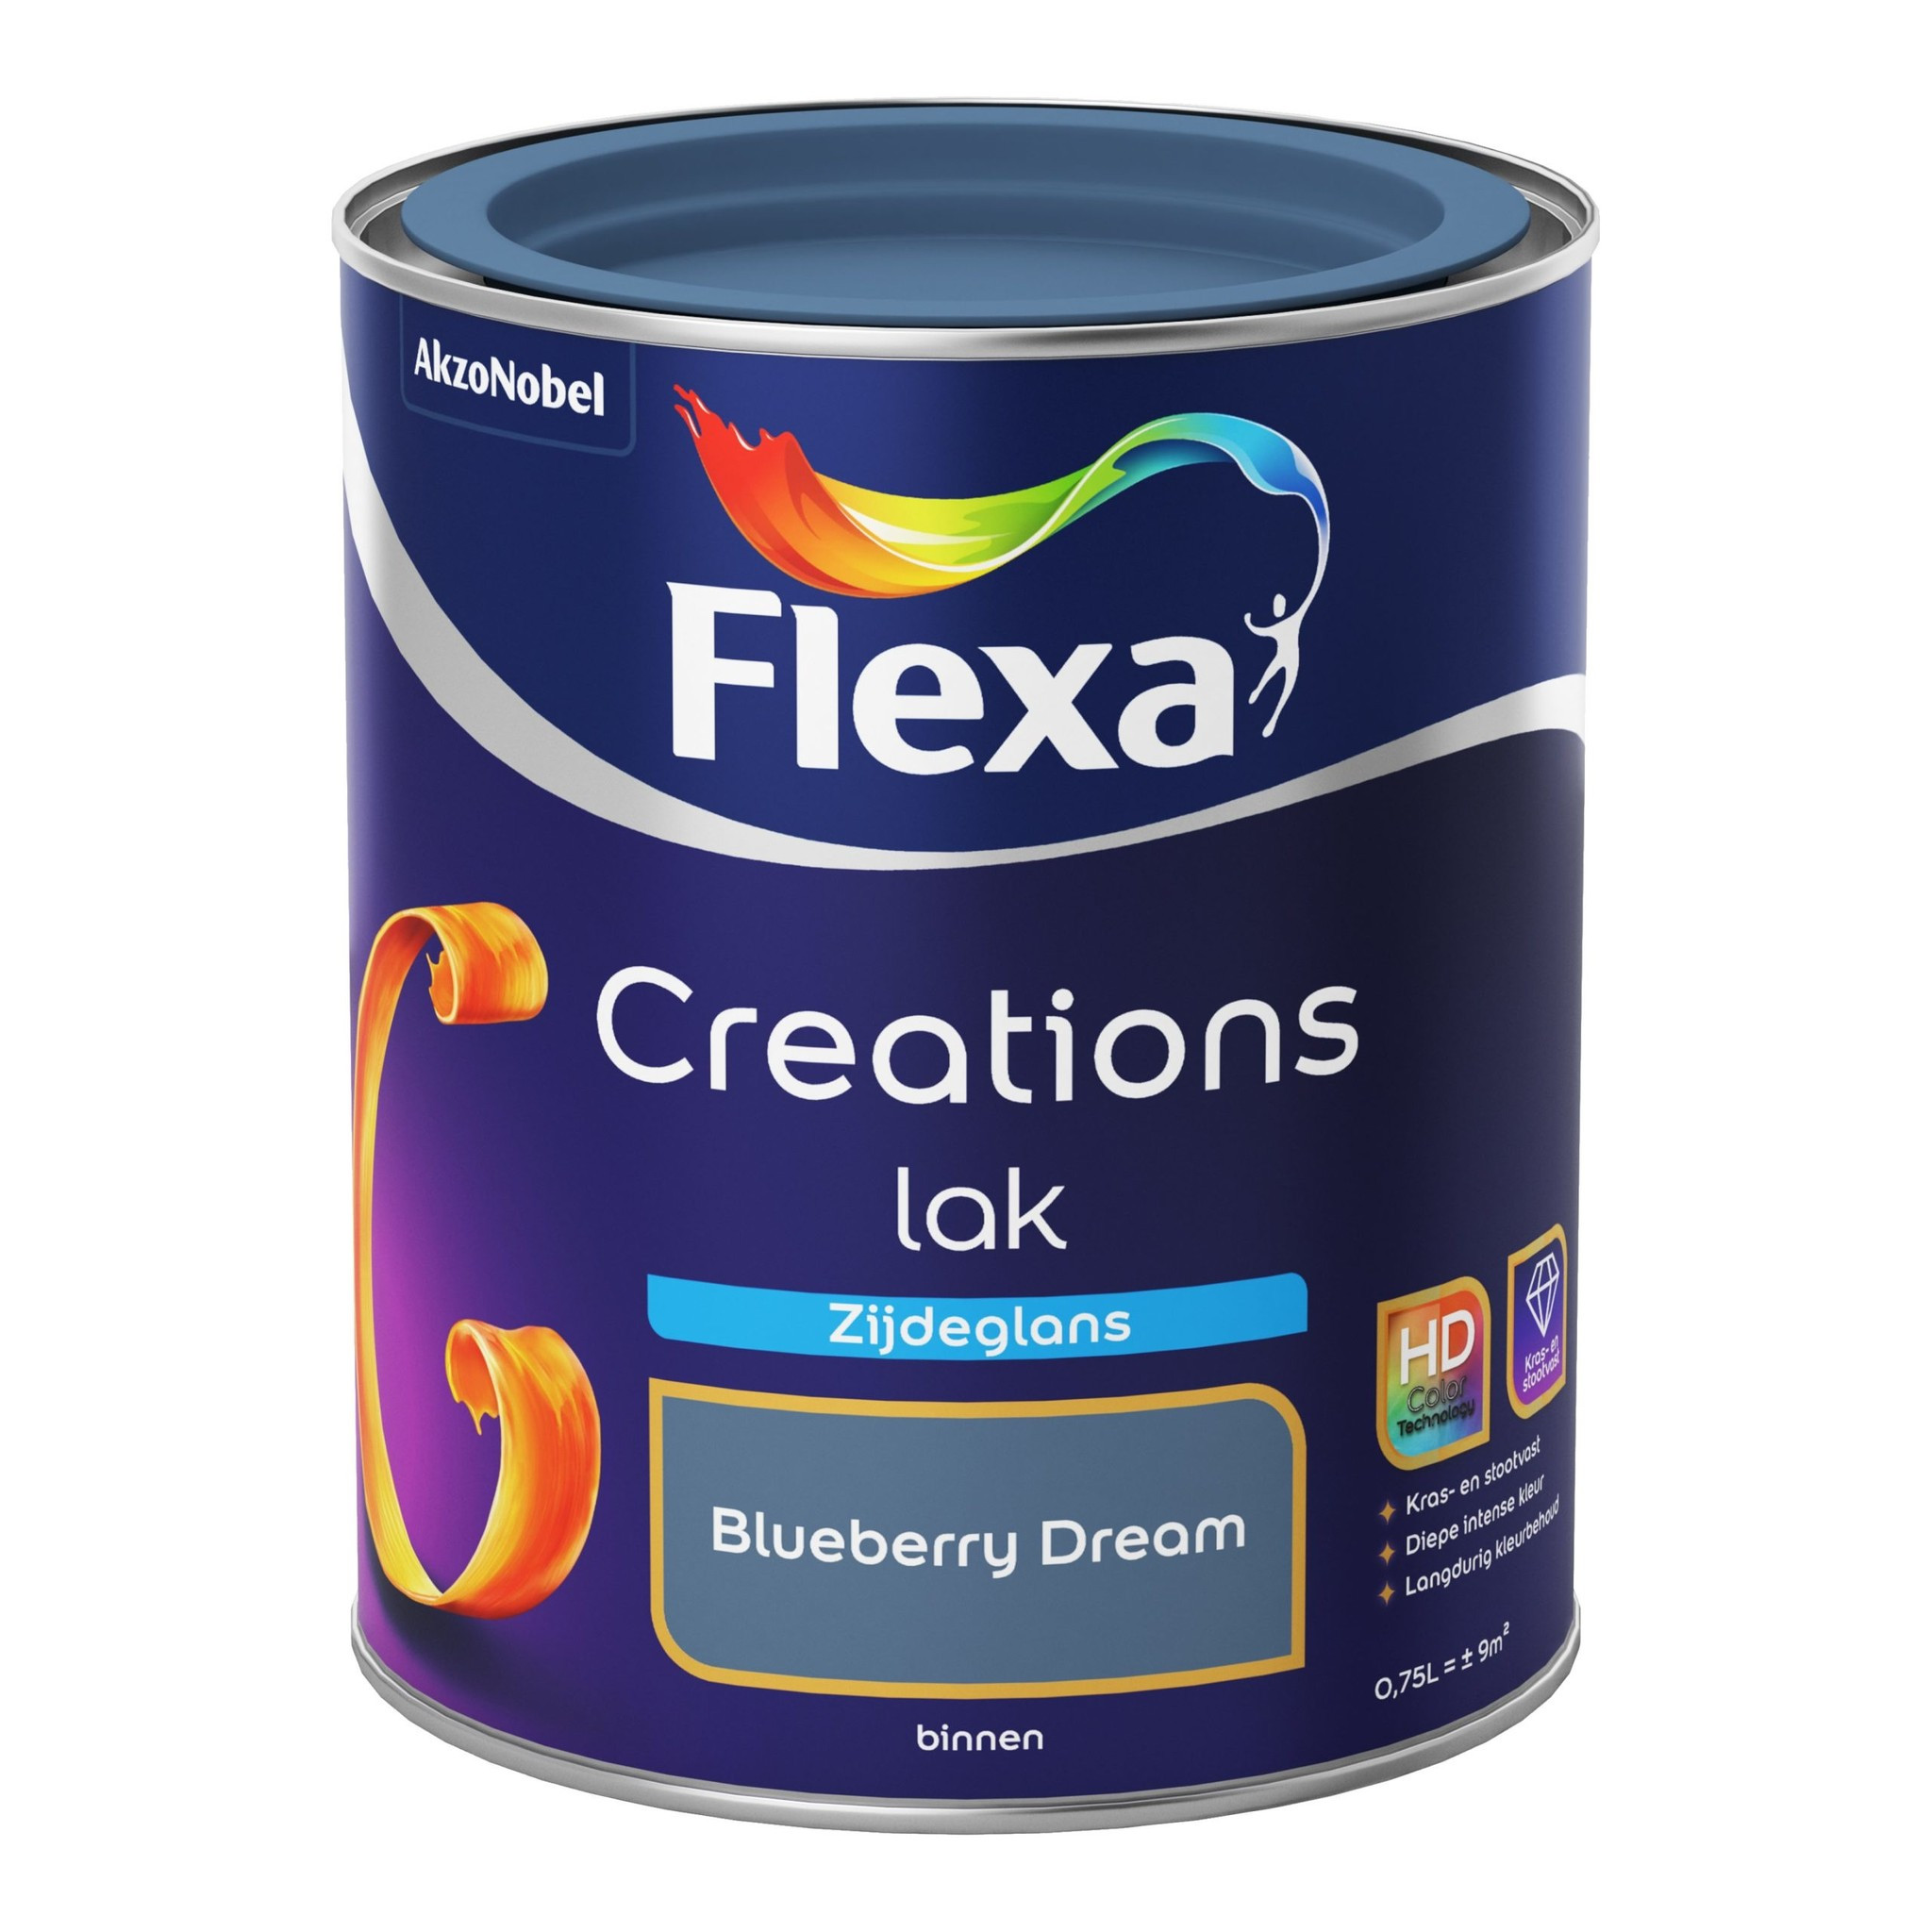 Flexa Creations Lak Zijdeglans - Blueberry Dream